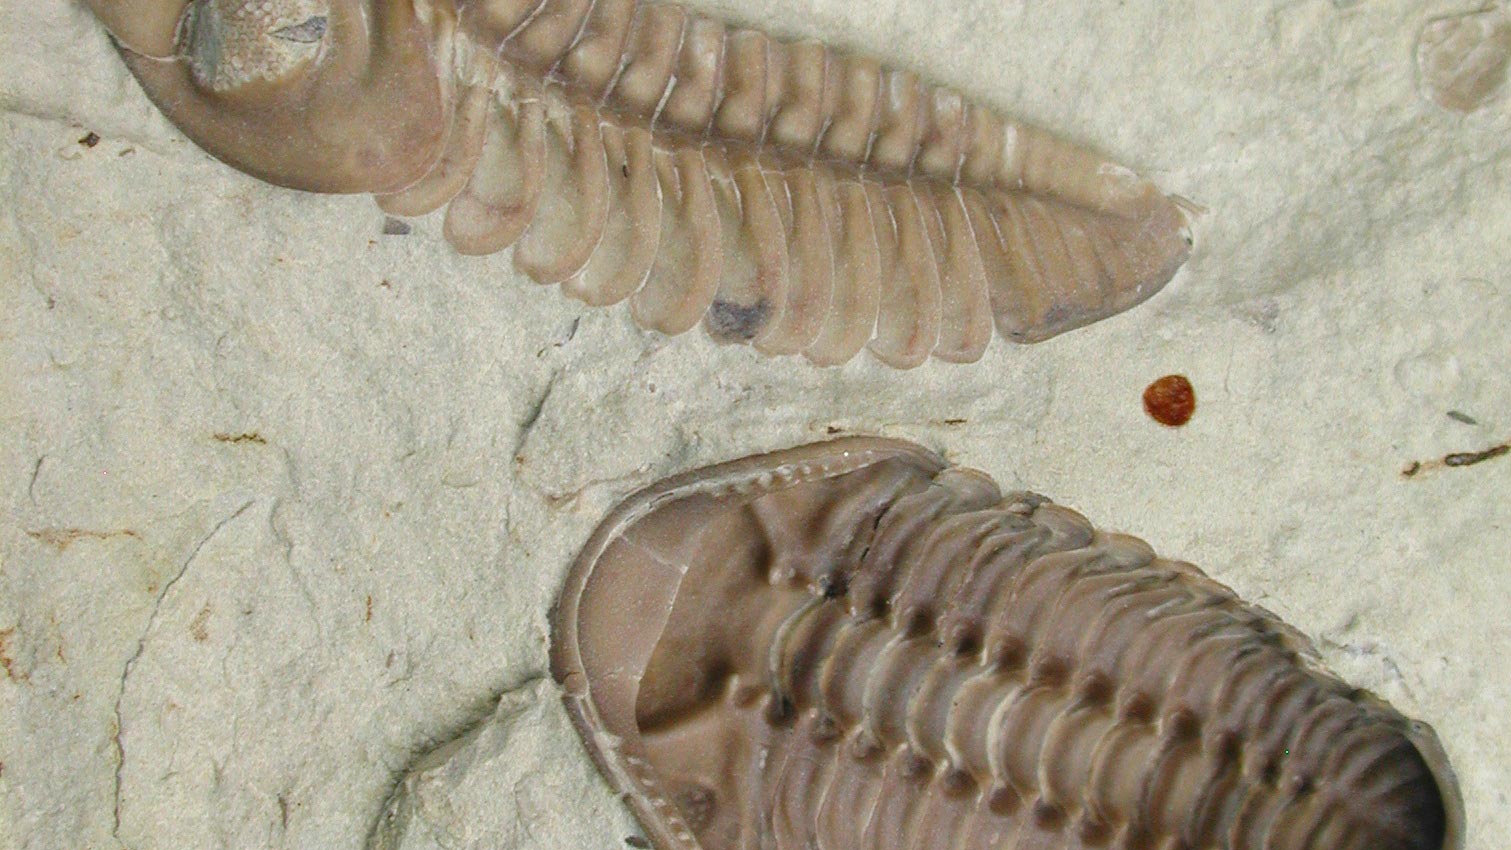 Two Kainops invius specimens.